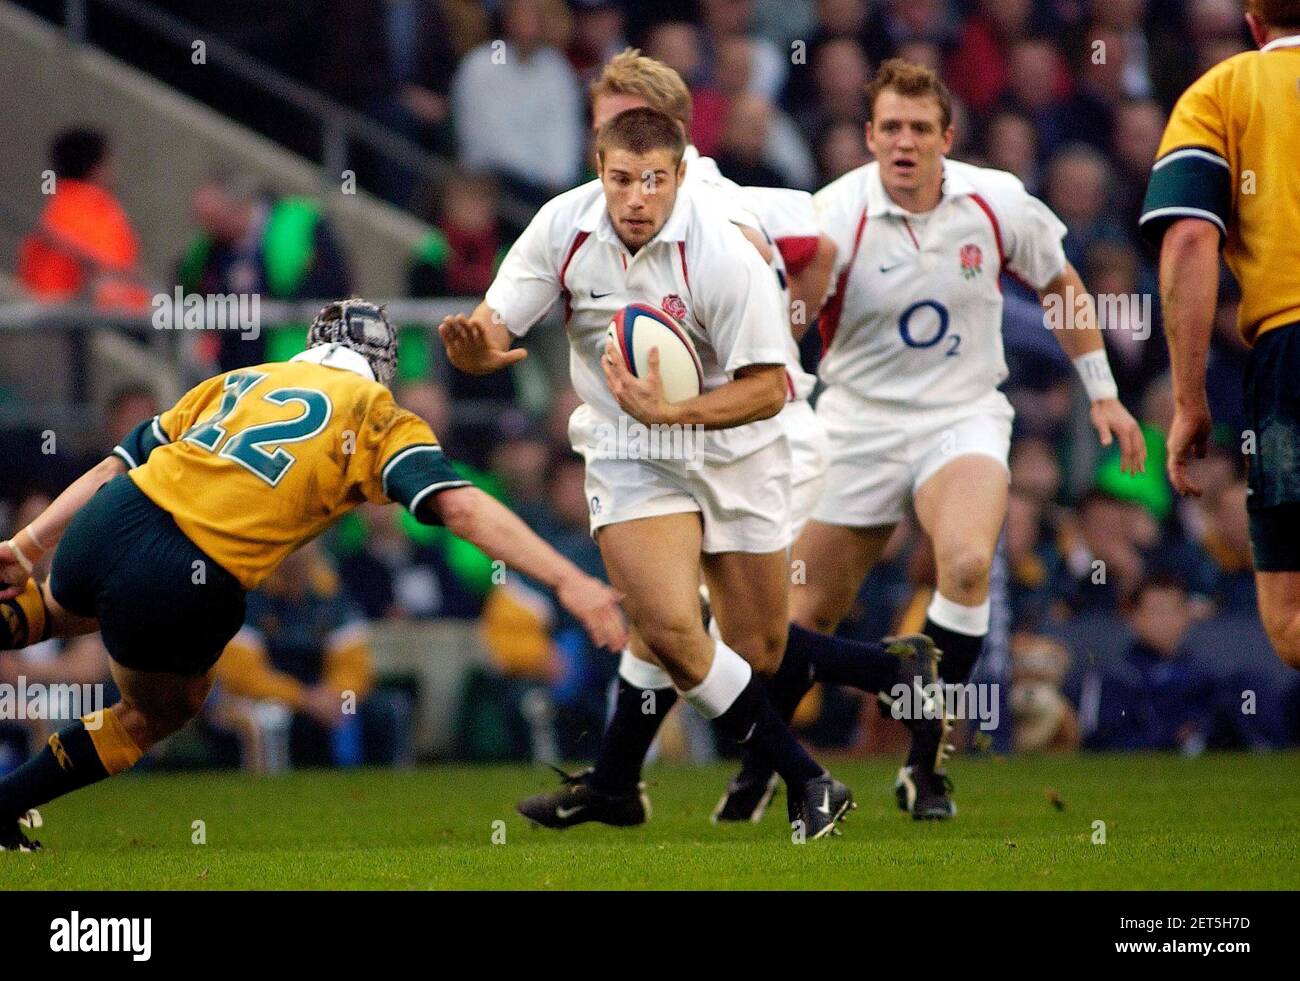 Rugby - Inghilterra / Australia - Novembre 2002 Foto Stock